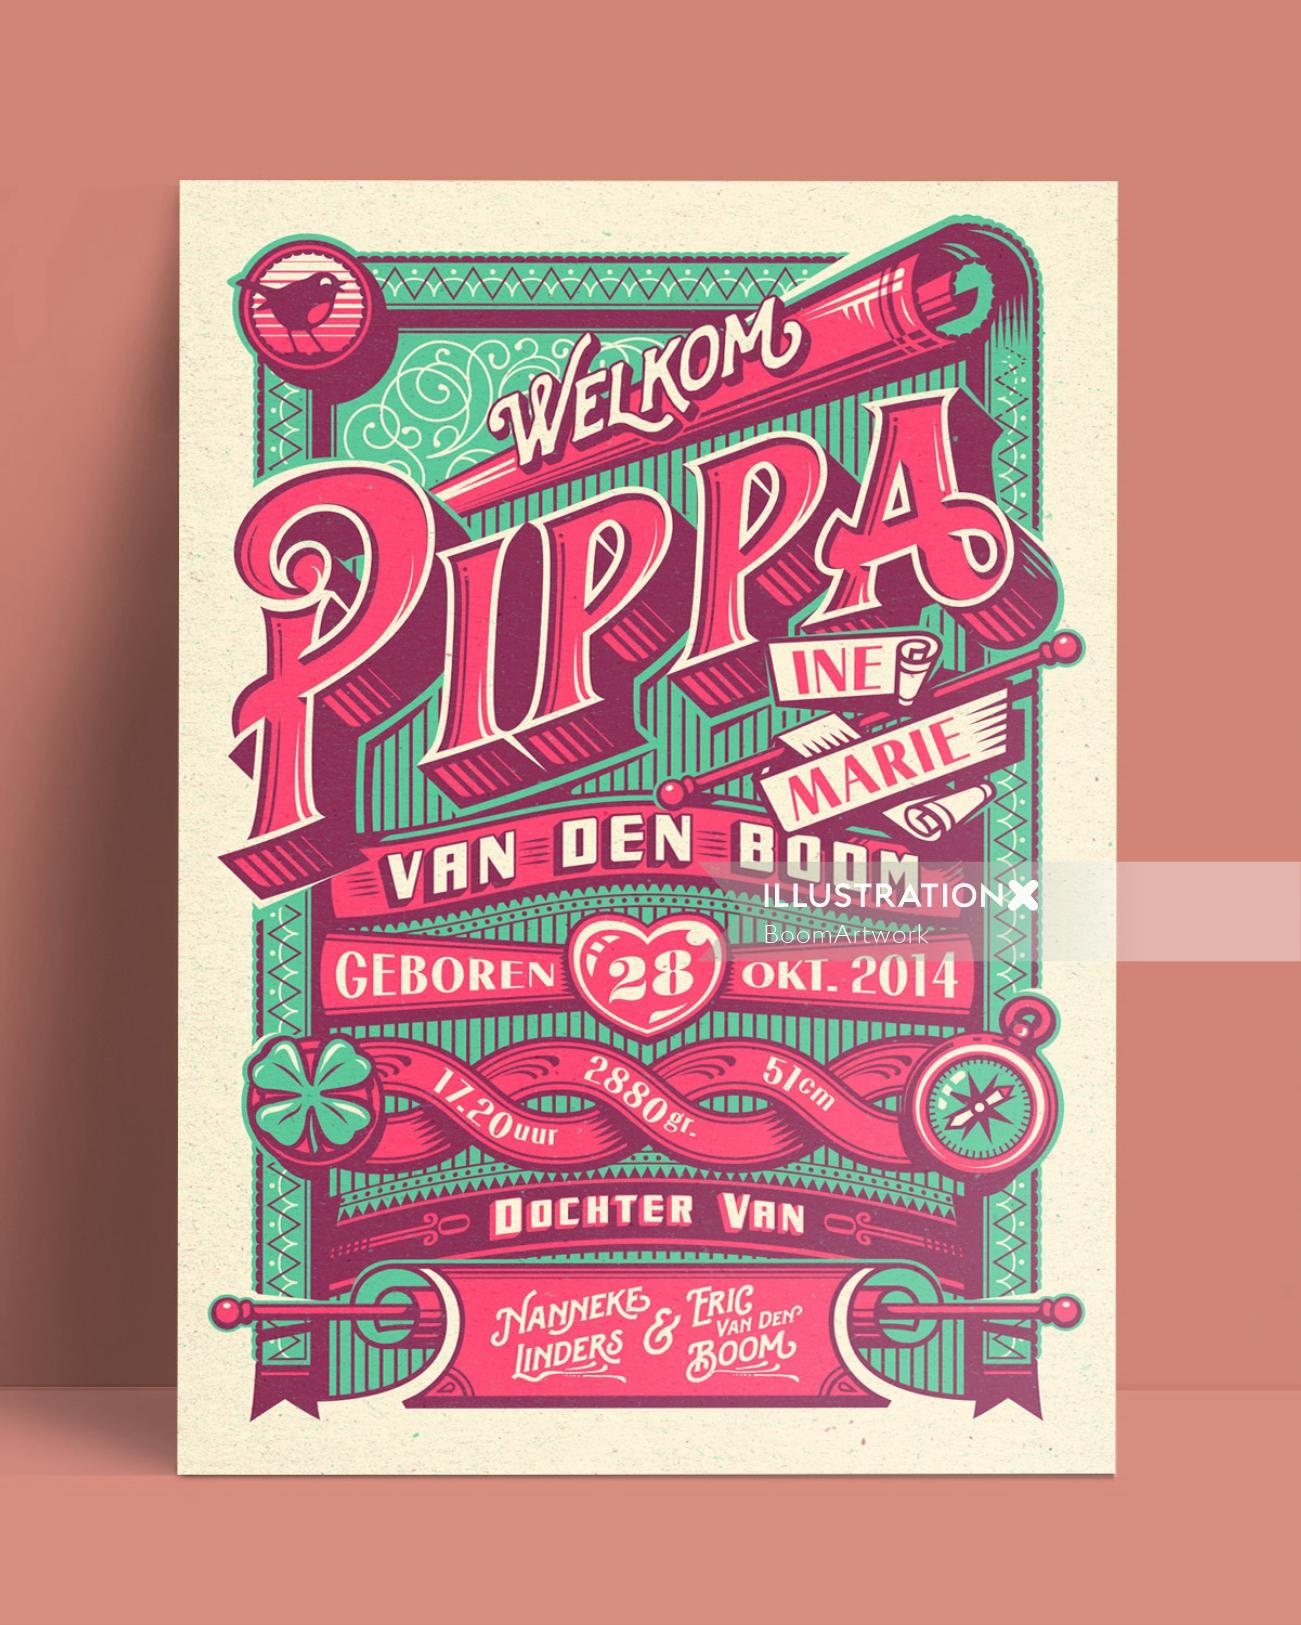 Graphic pippa birthday announcement card
